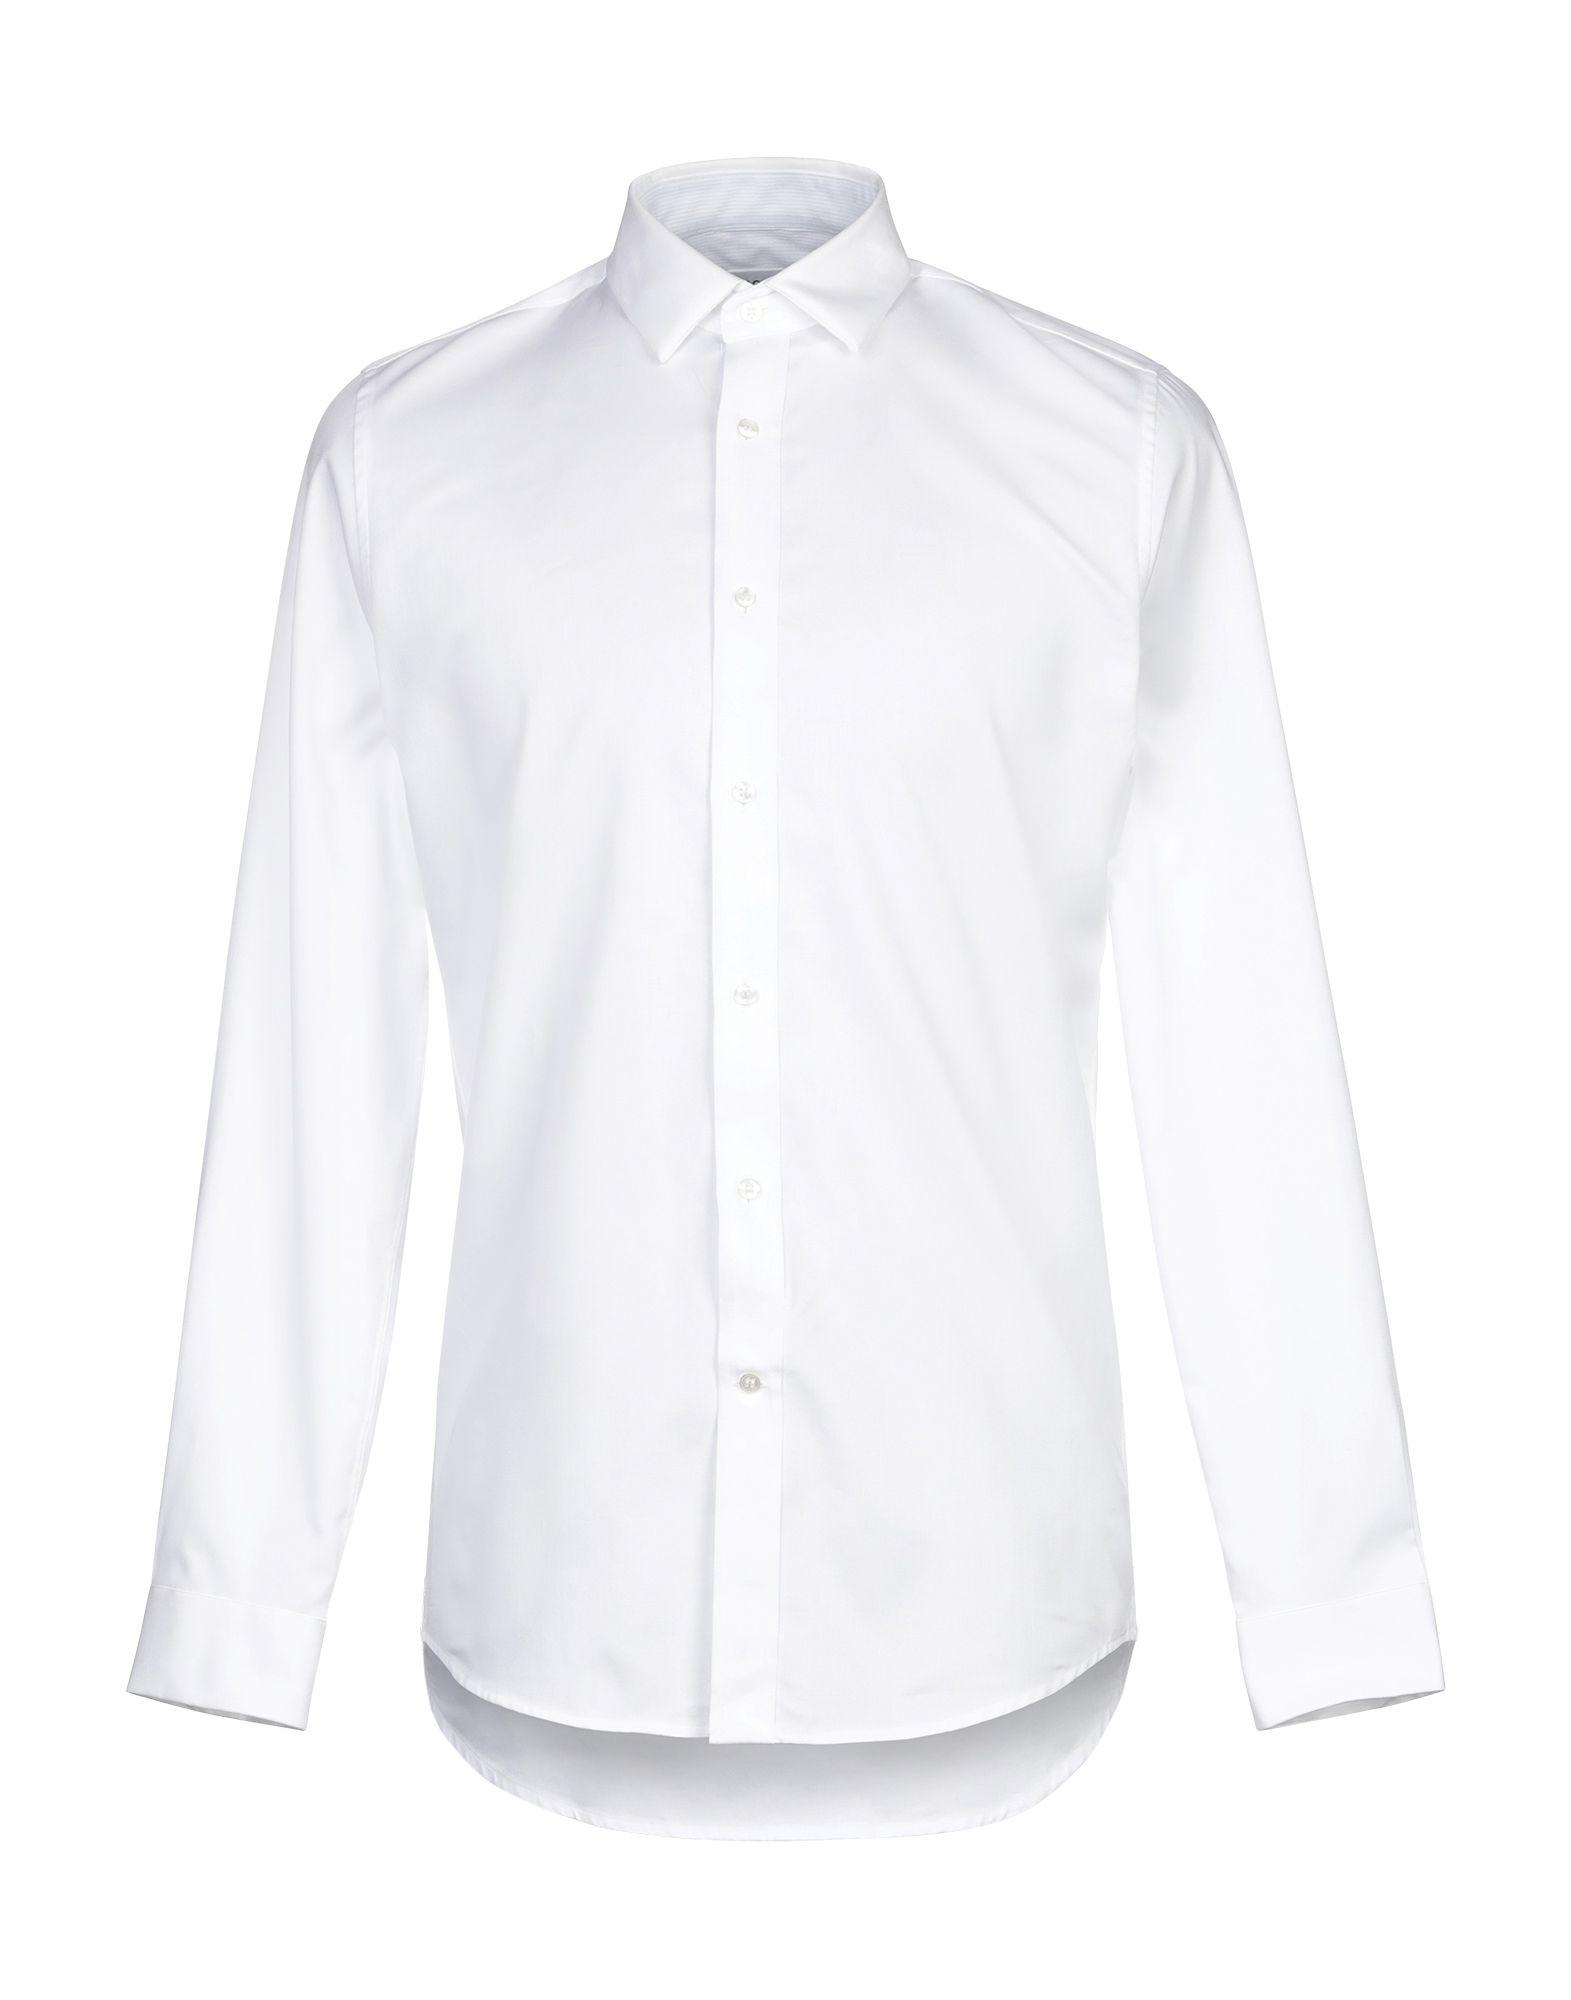 Lacoste Shirt in White for Men - Lyst